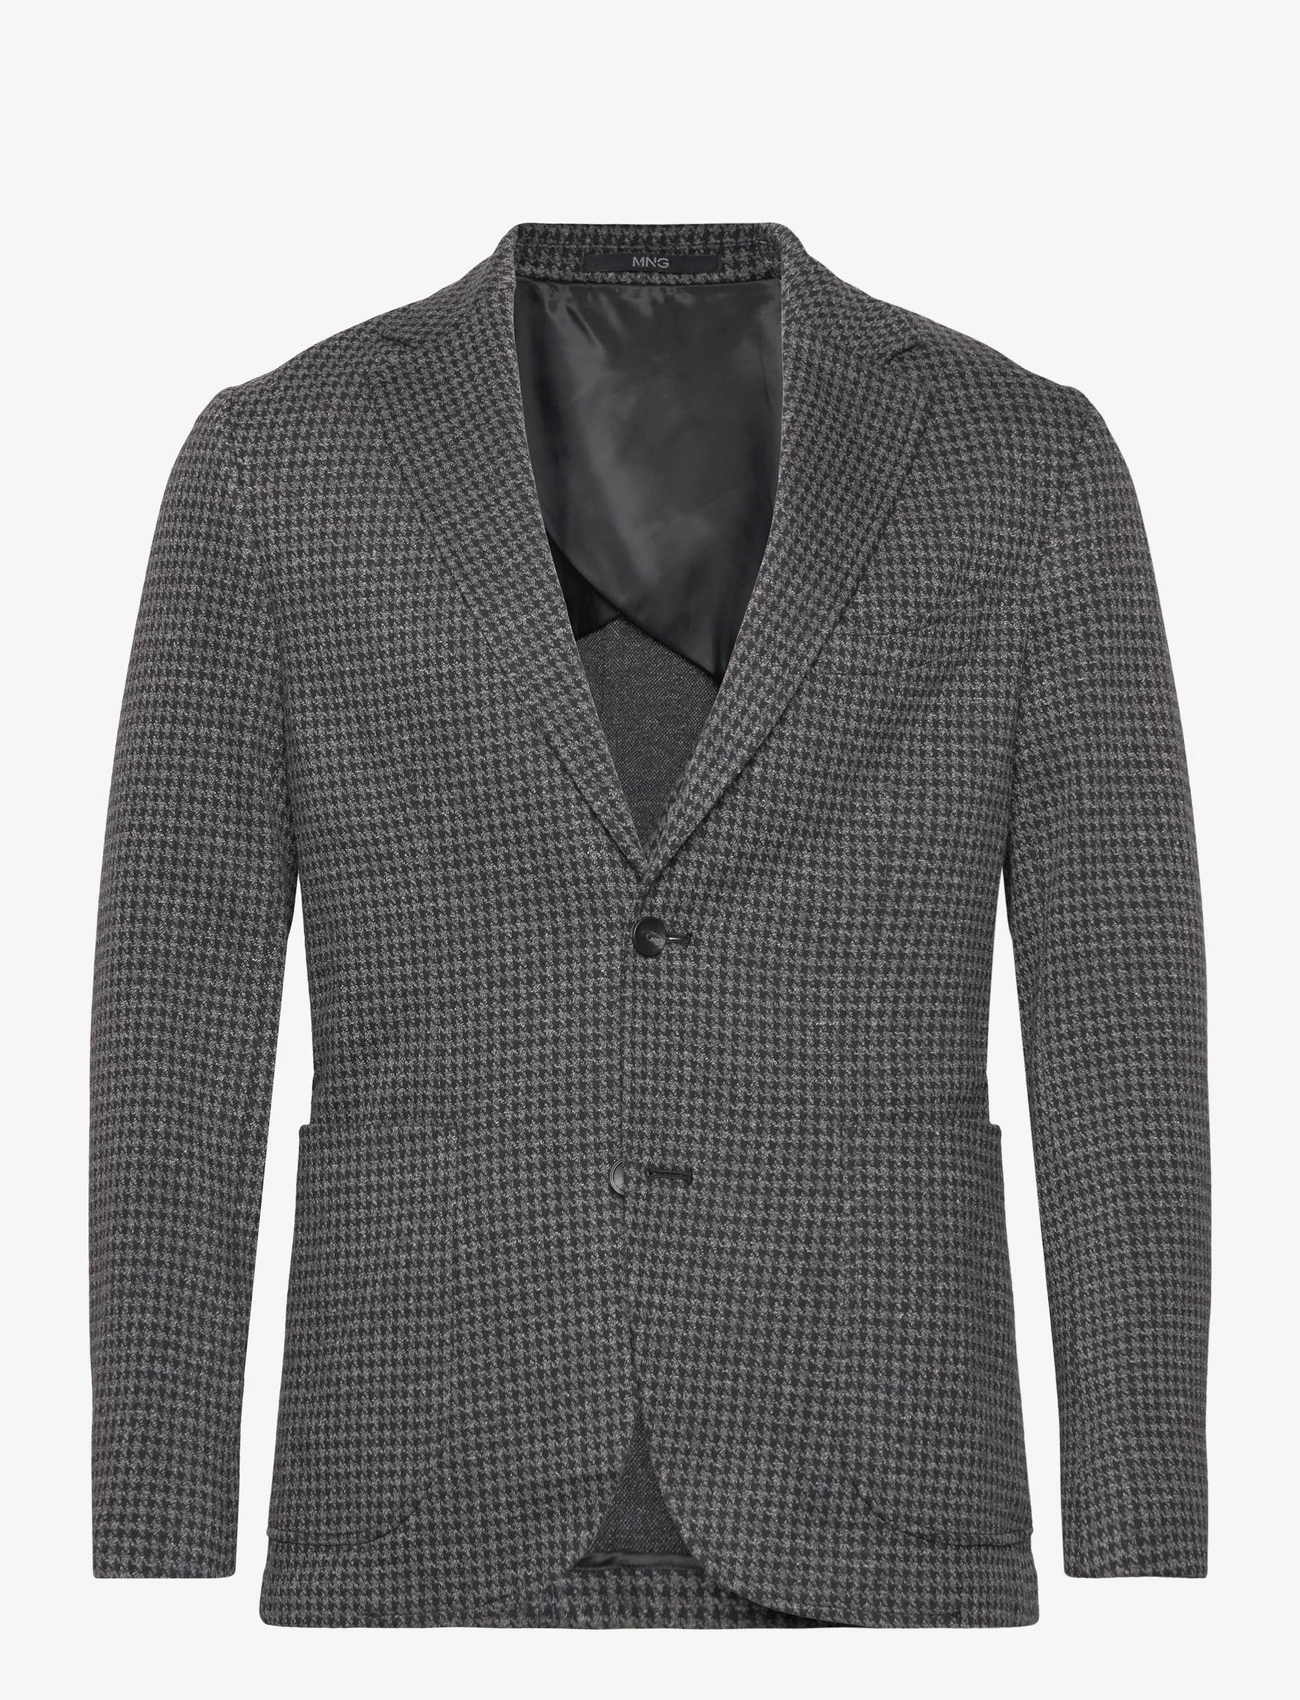 Mango - Slim-fit micro-houndstooth jacket - dobbeltspente blazere - grey - 0